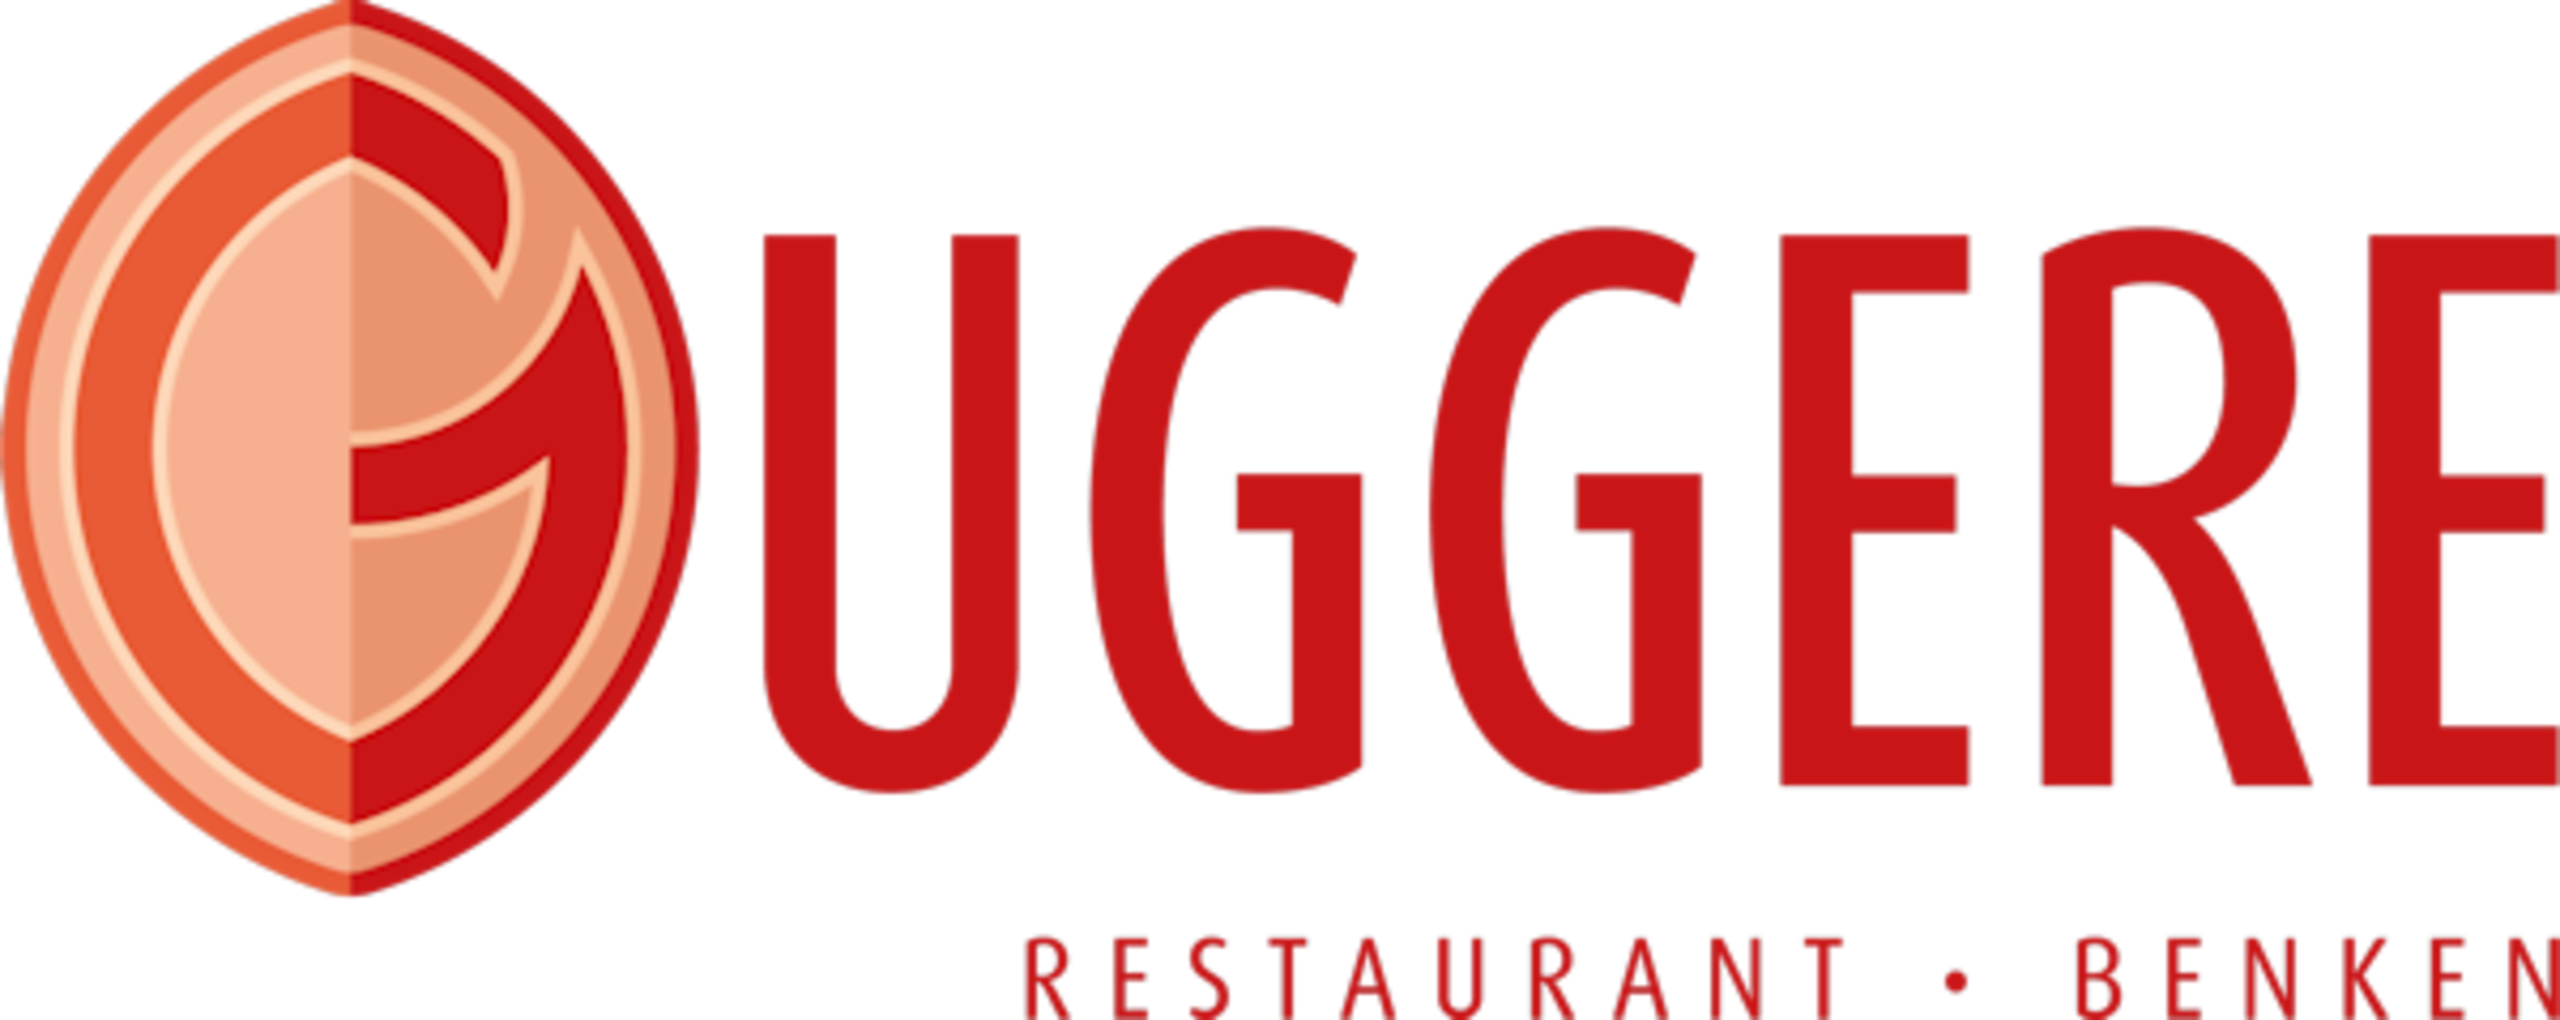 Logo Restauraunt Guggere, Benken